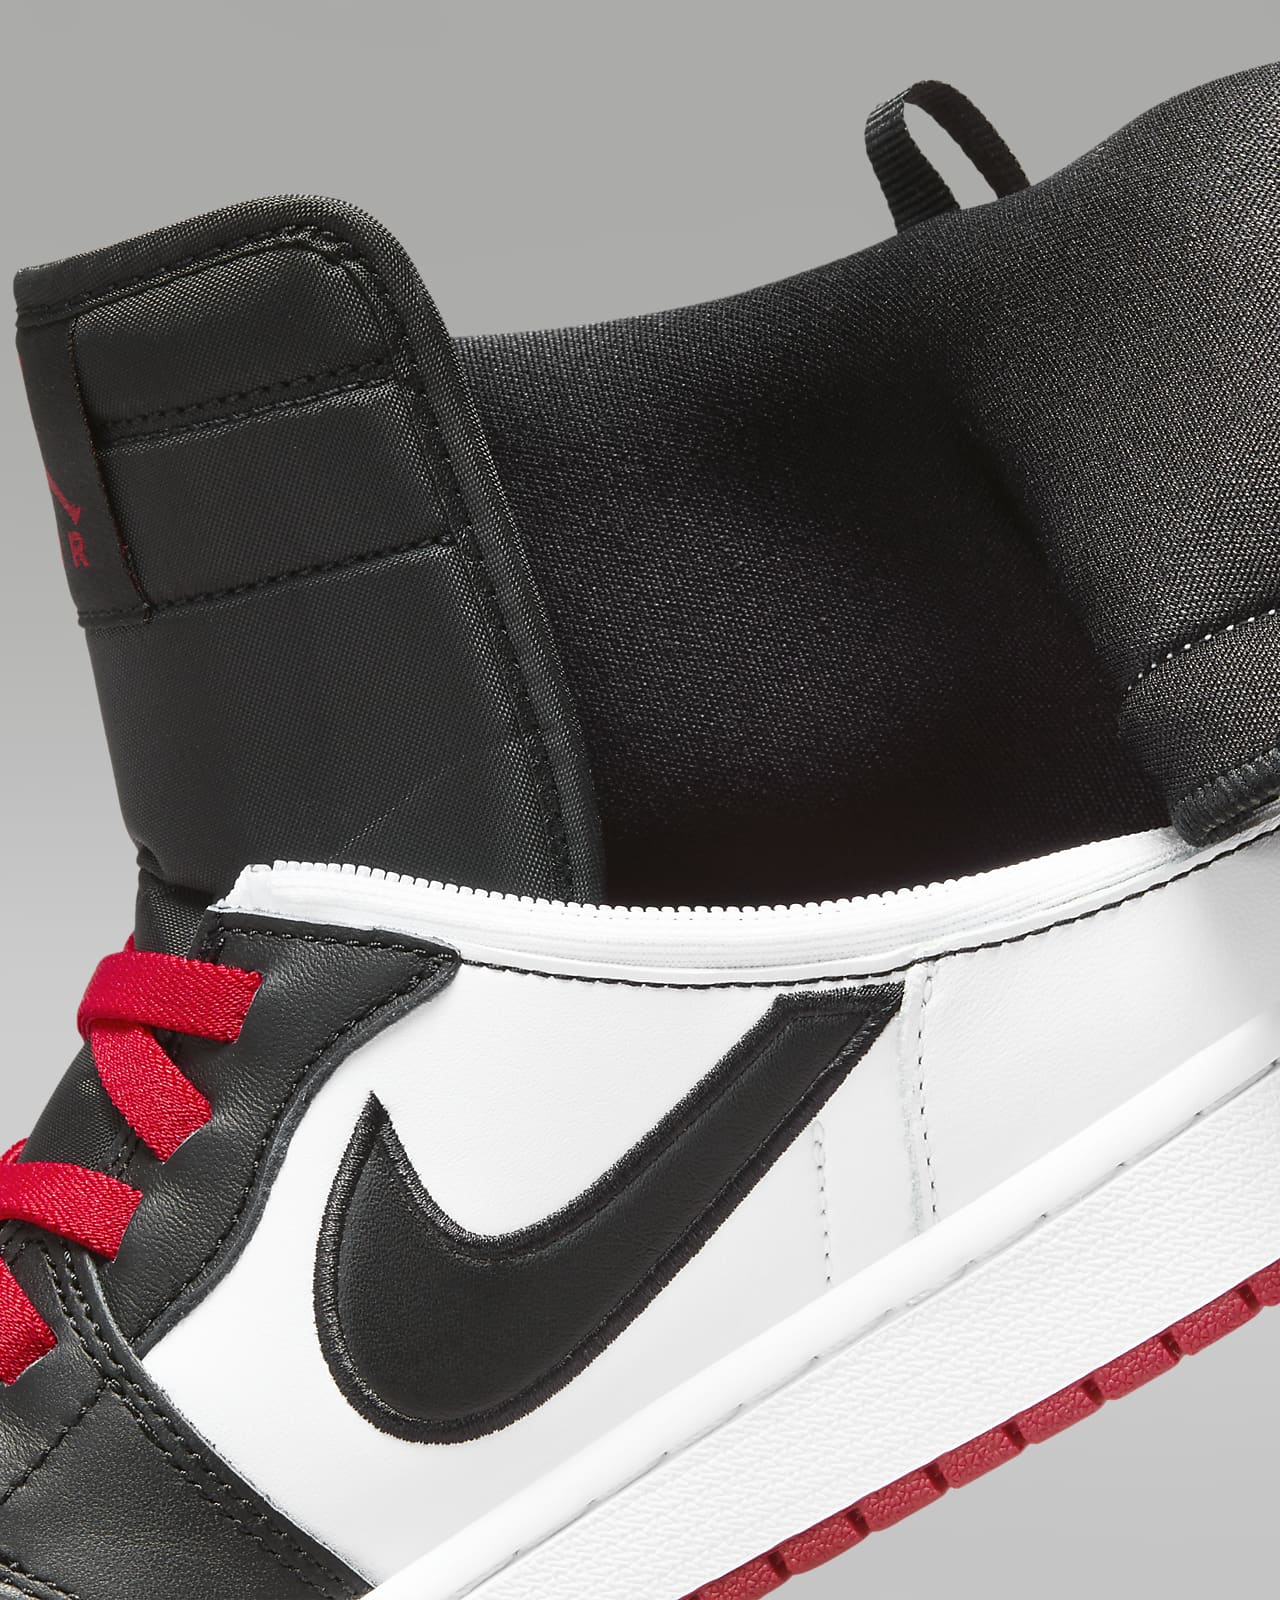 Nike Air Jordan 1 Retro High Black White | Size 13, Sneaker in Black/White